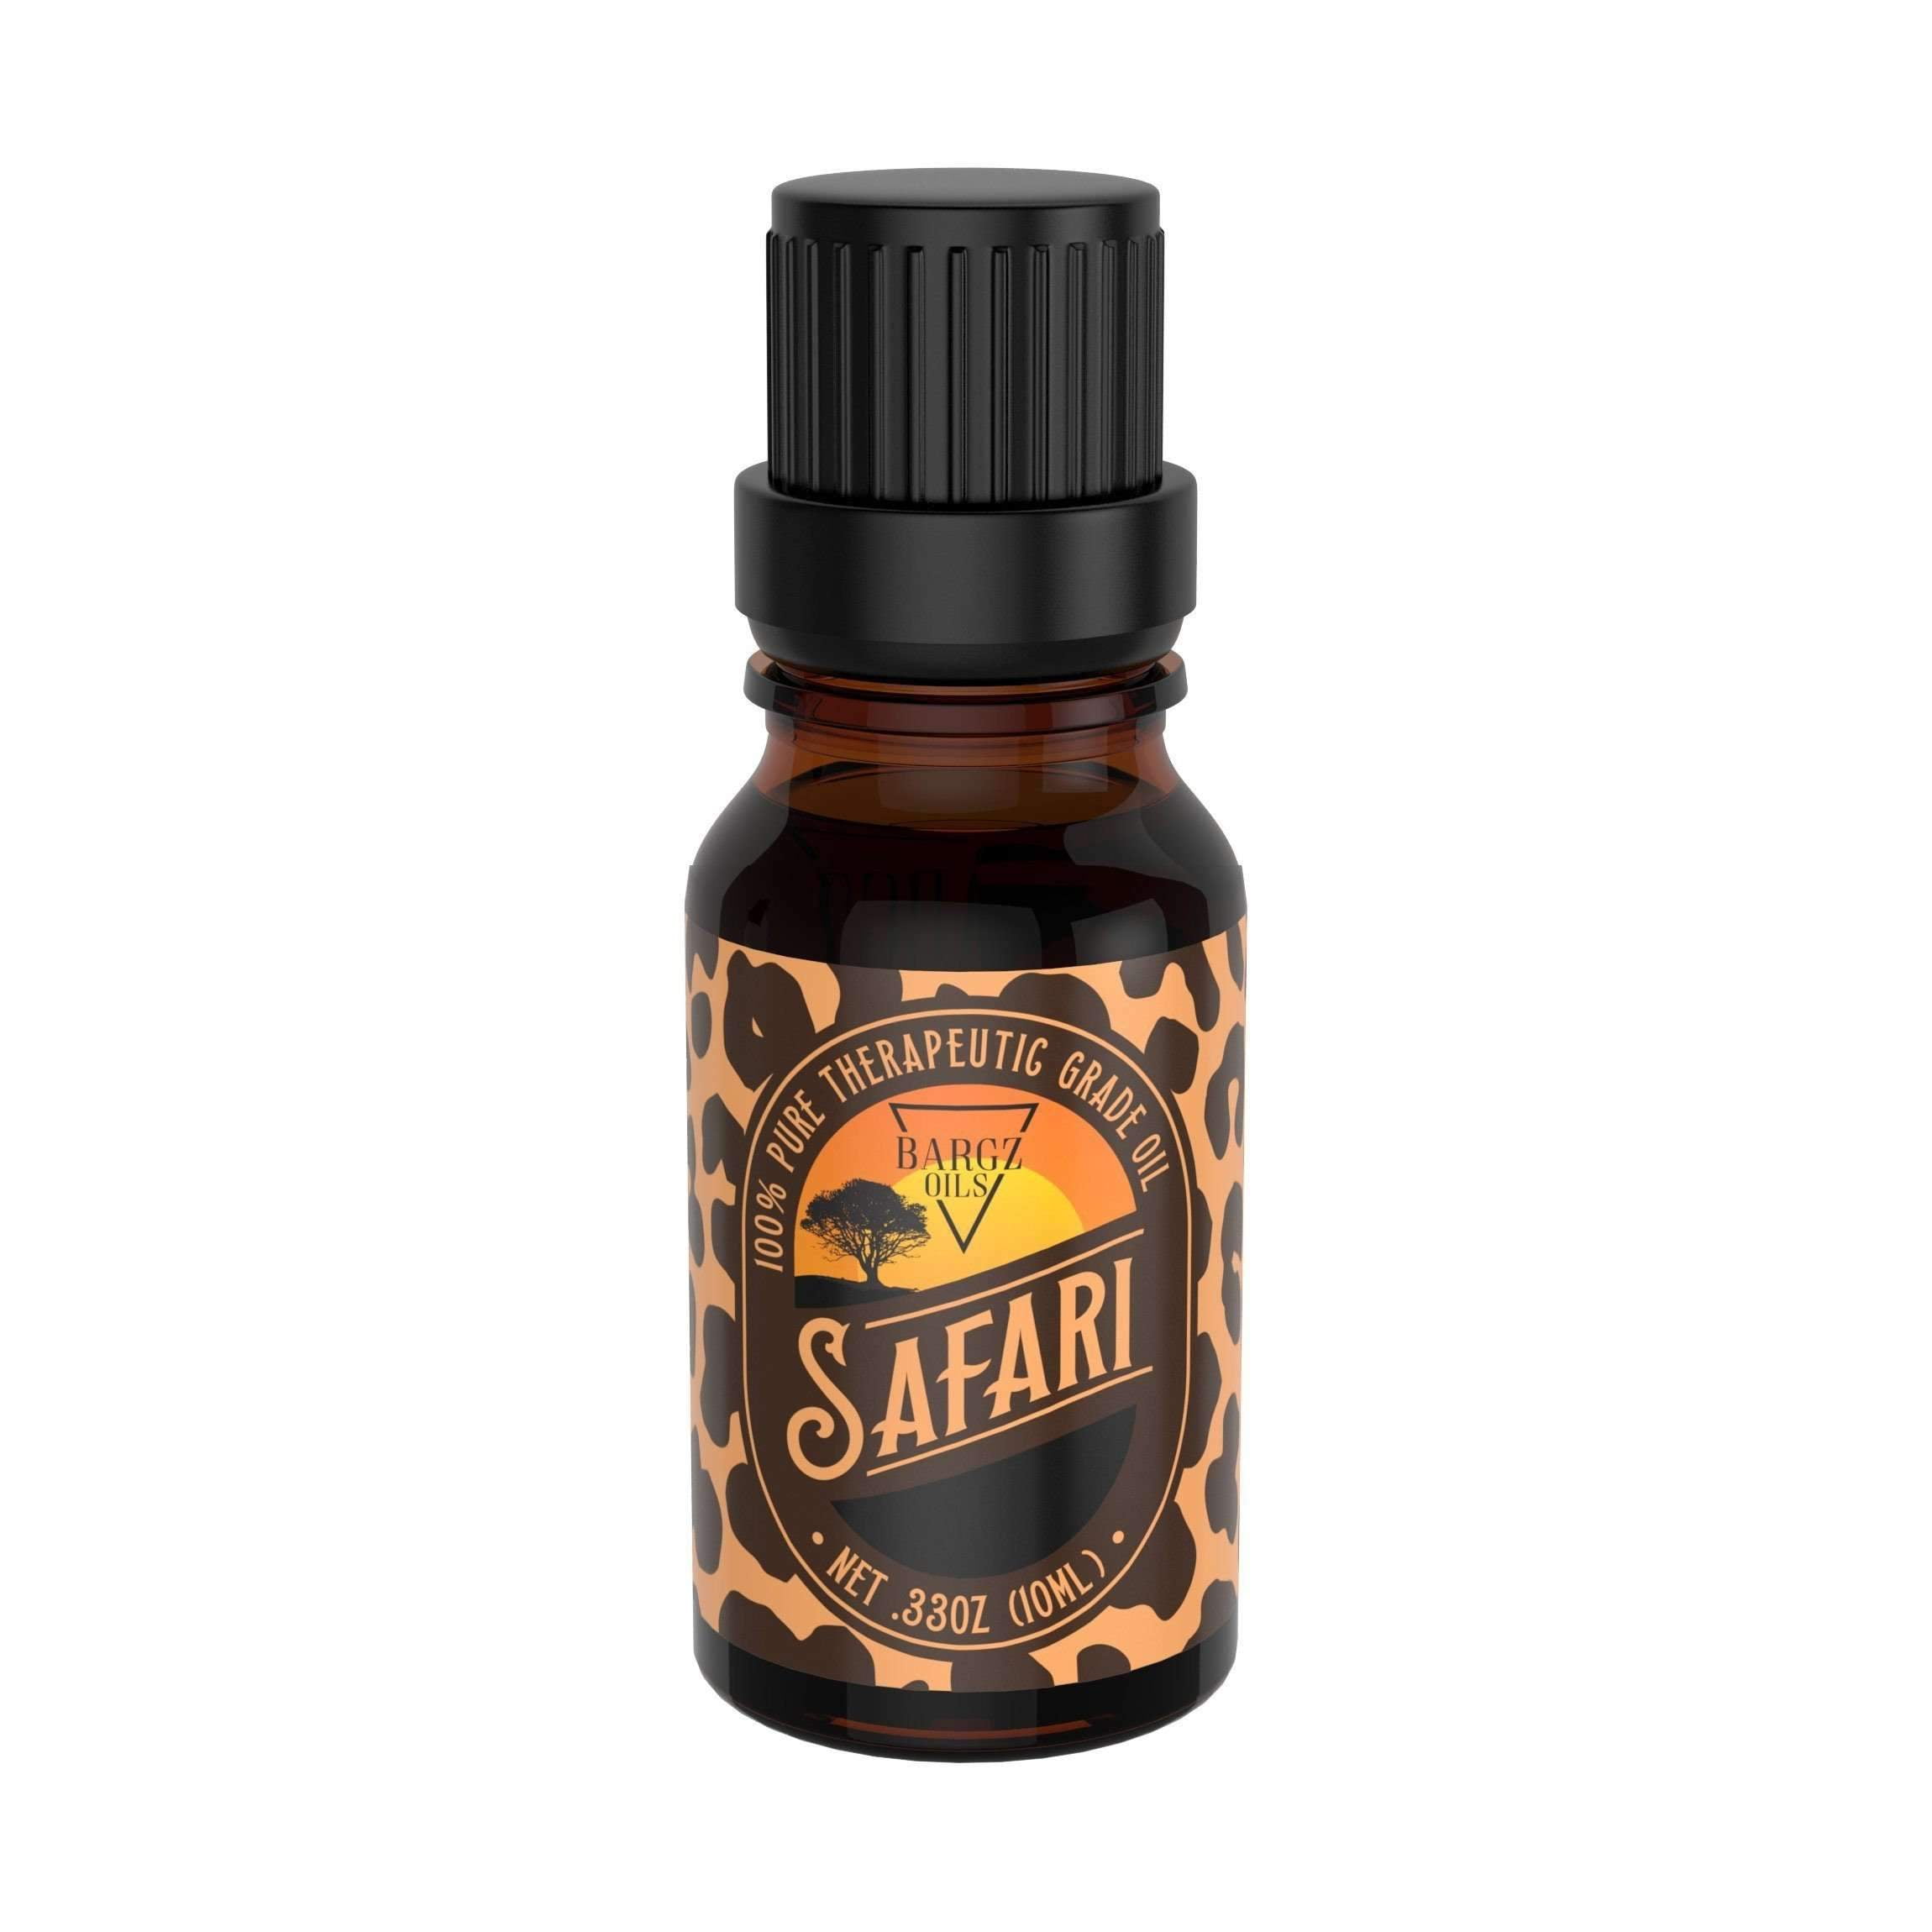 99 safari oil